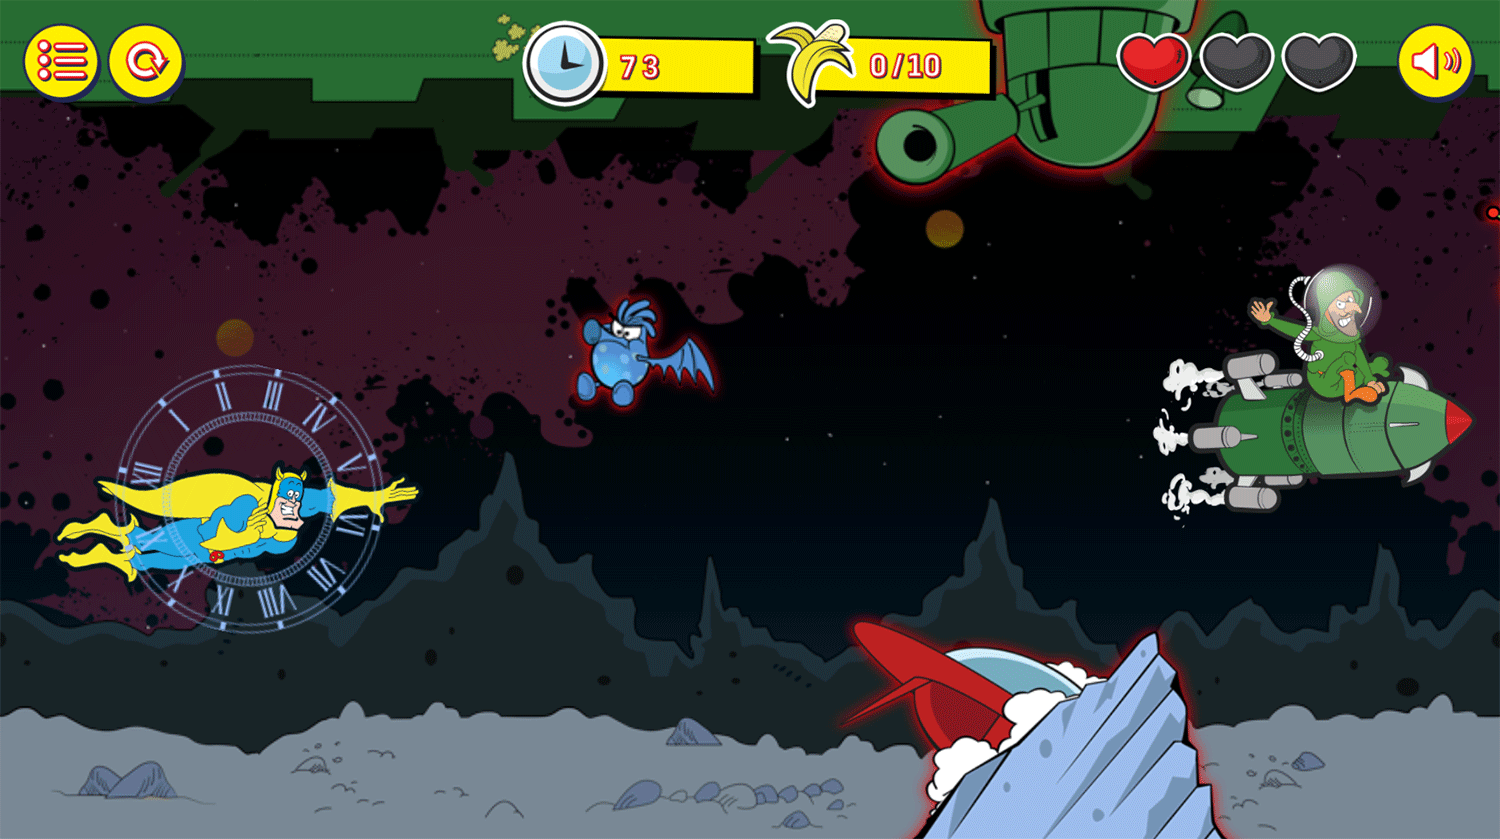 Bananaman Chase in Space Game Screenshot.